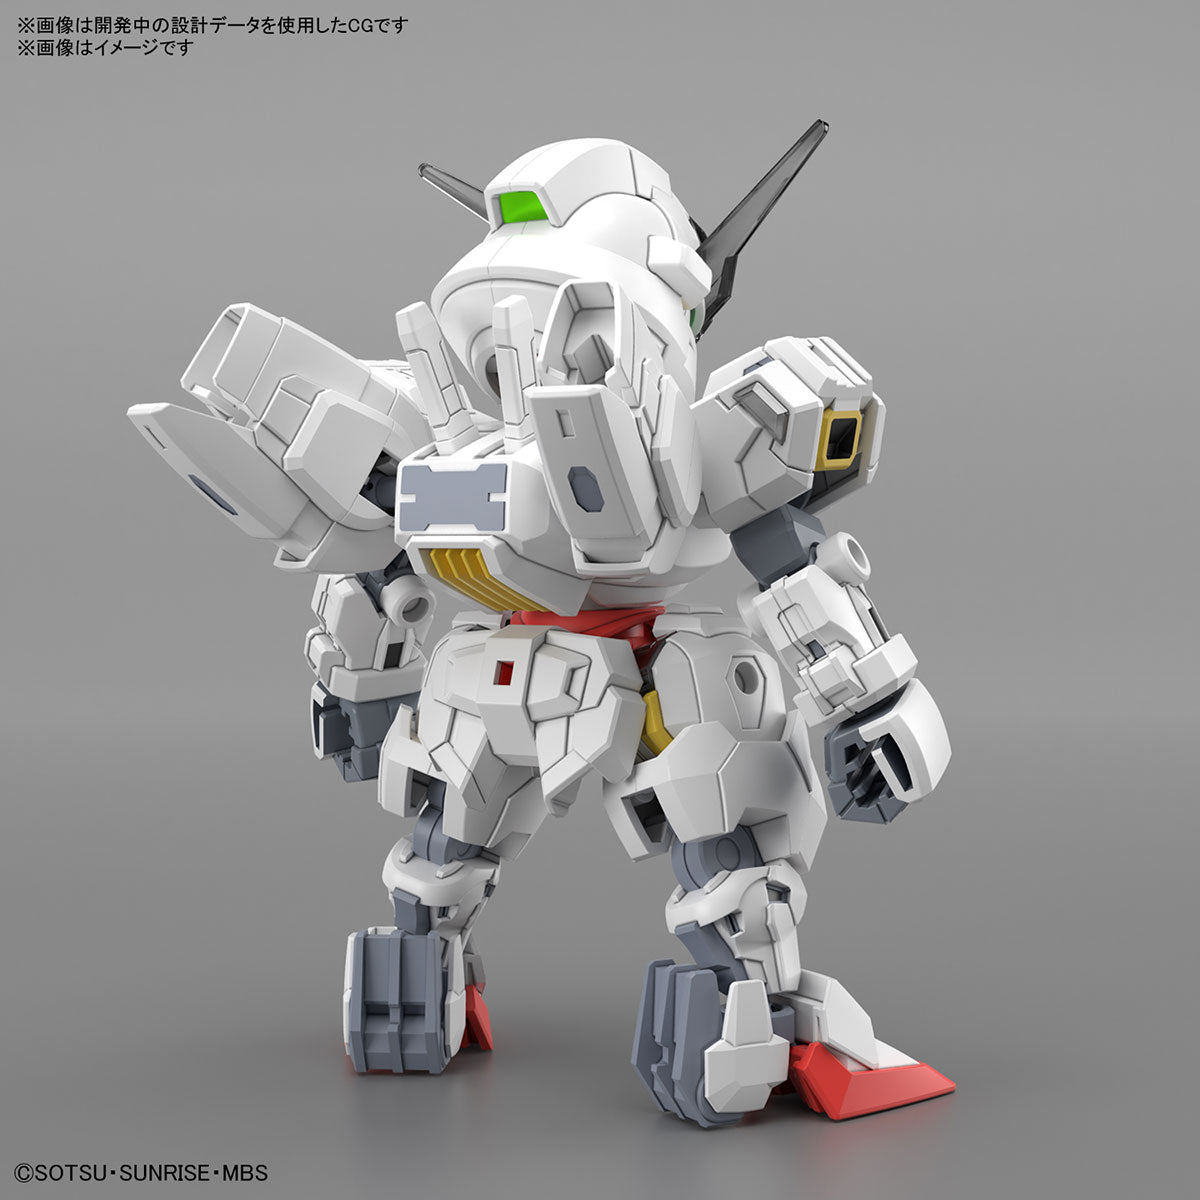 Bandai Gunpla SD Cross Silhouette SDCS Gundam Calibarn Plastic Model Action Toy VCA Singapore